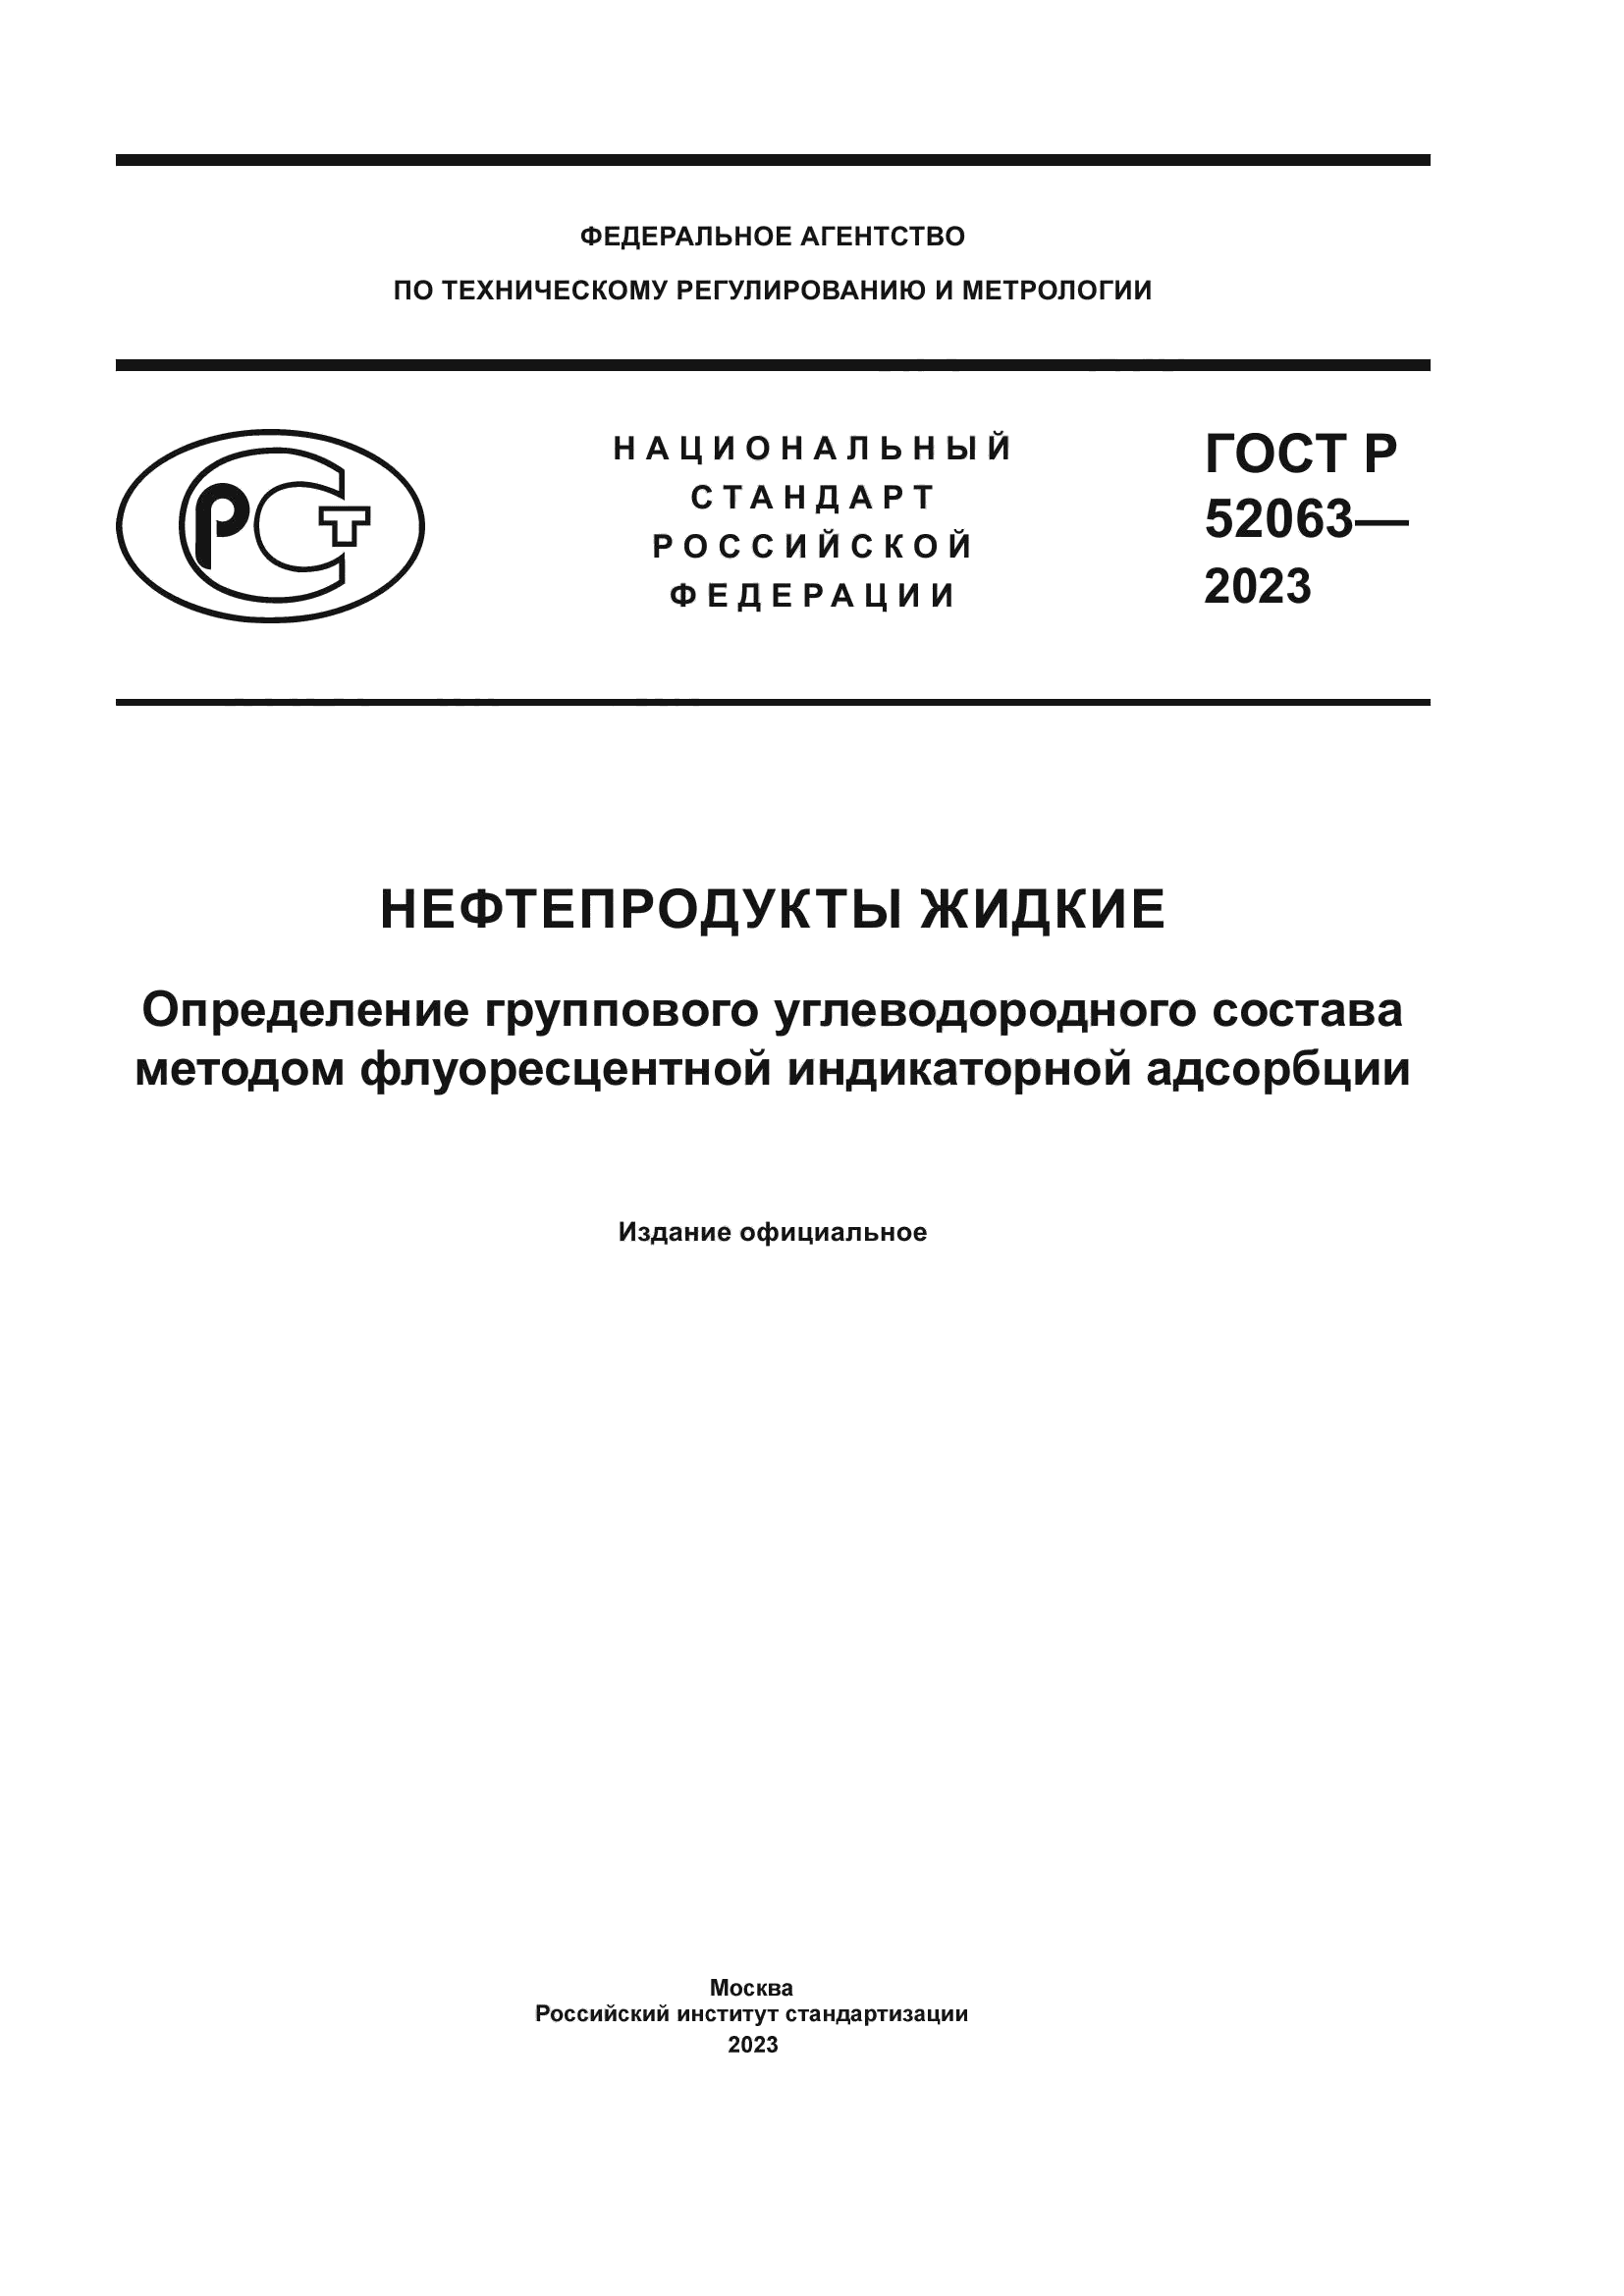 ГОСТ Р 52063-2023